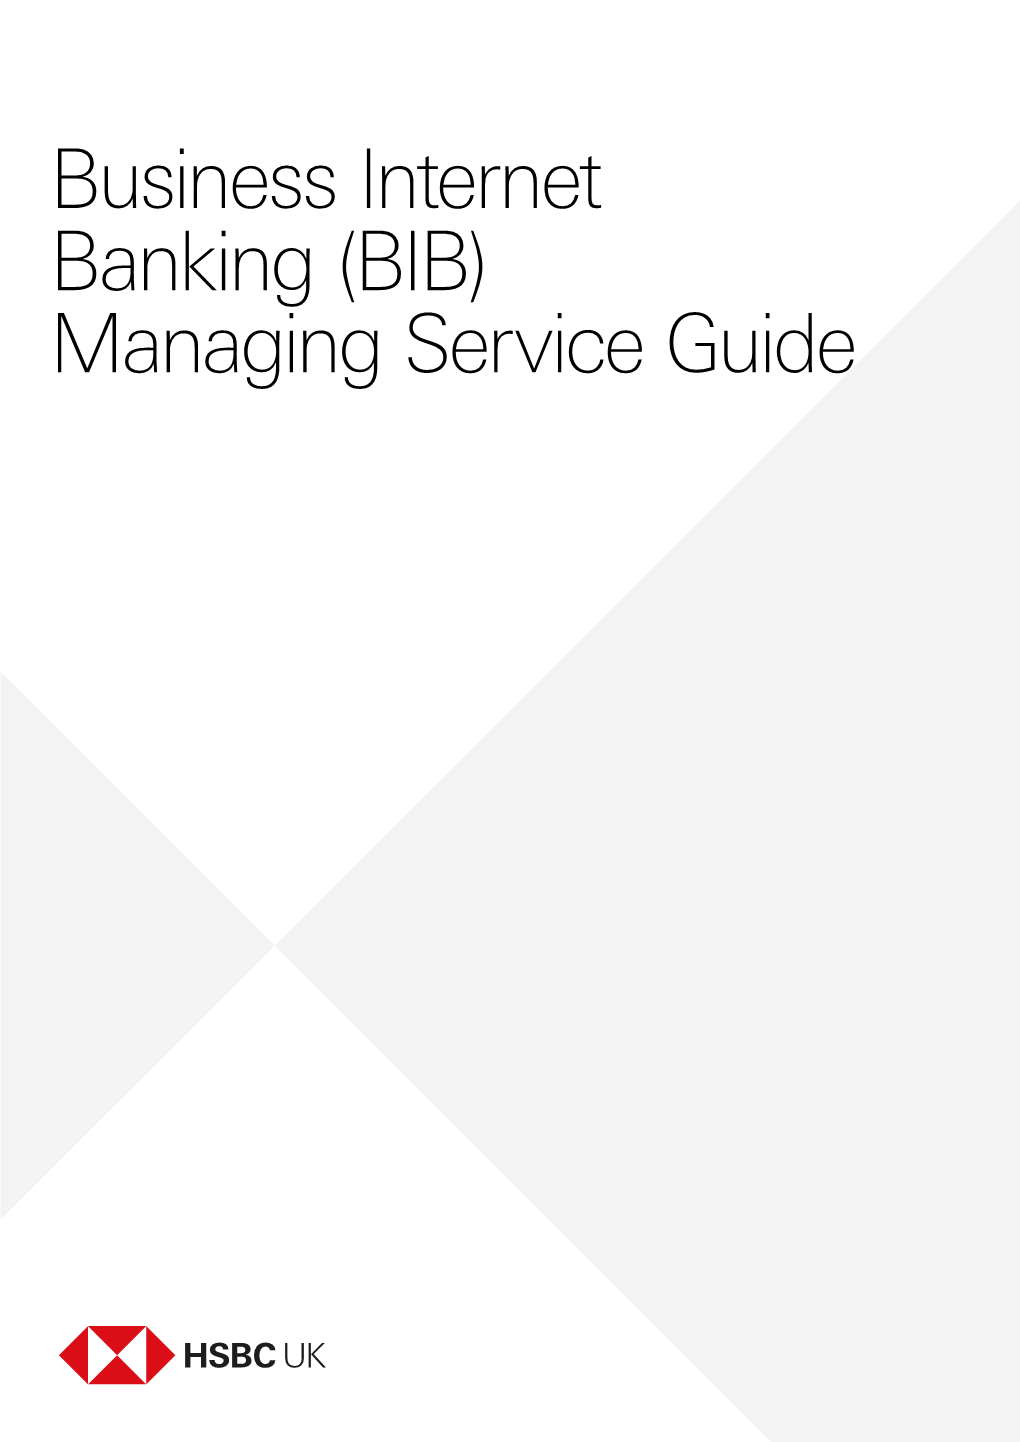 Business Internet Banking (BIB) Managing Service Guide 2